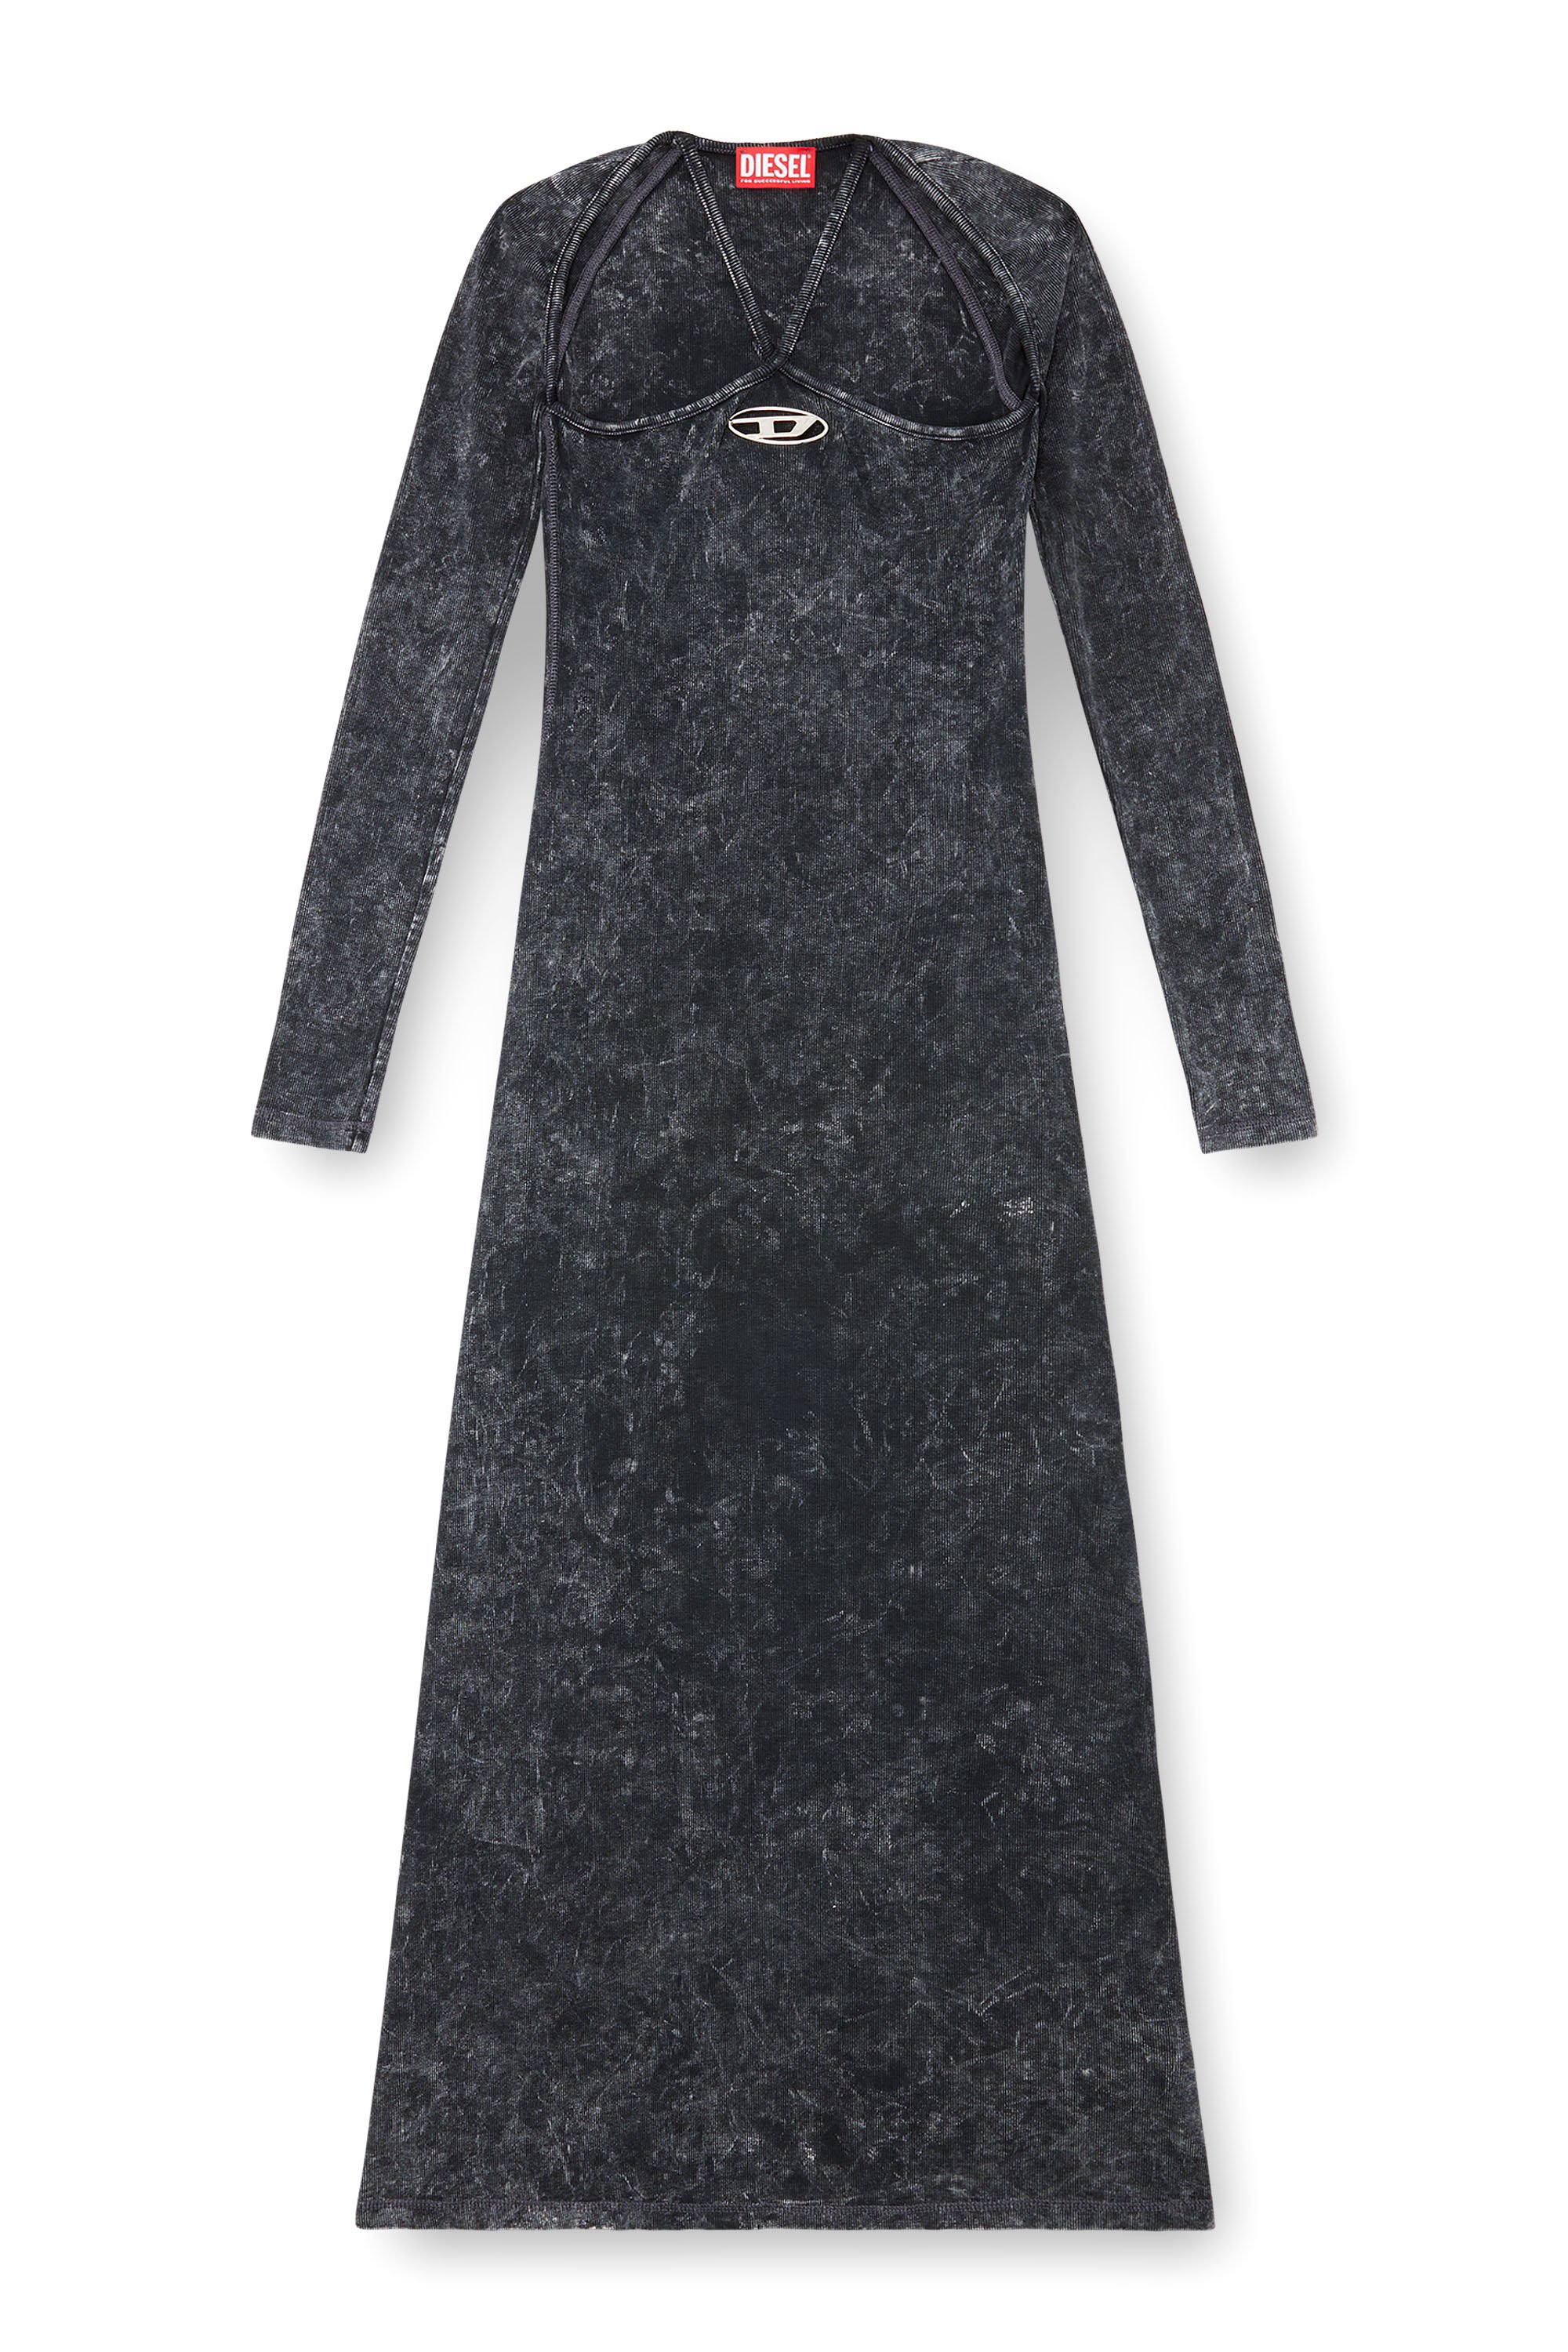 Diesel - D-MARINEL, Damen Langes Kleid in marmorierter Optik in Schwarz - Image 4